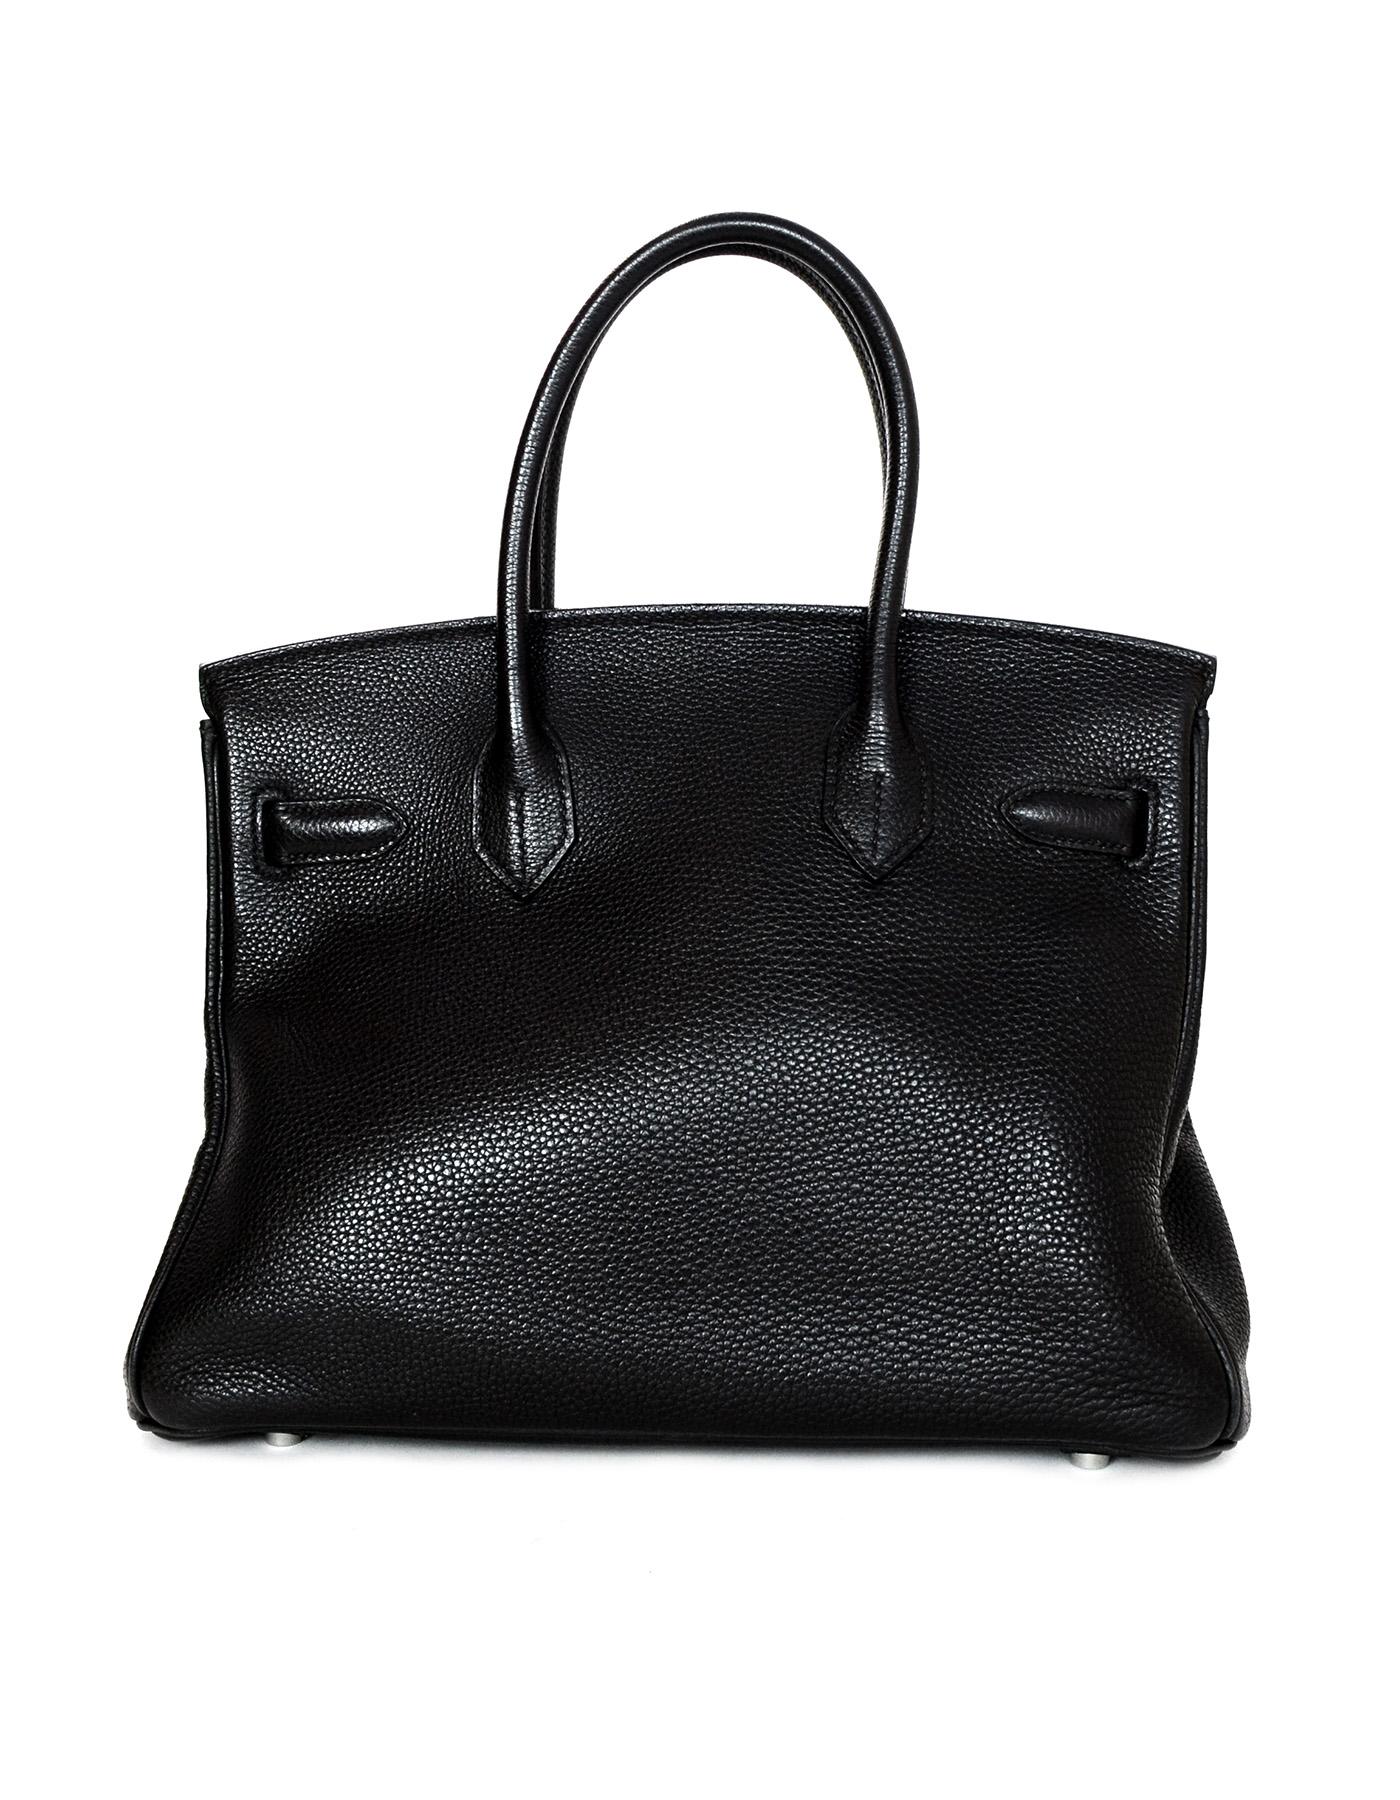 Hermes Black Togo Leather 30CM Birkin Bag w. Palladium/Silvertone Hardware 1